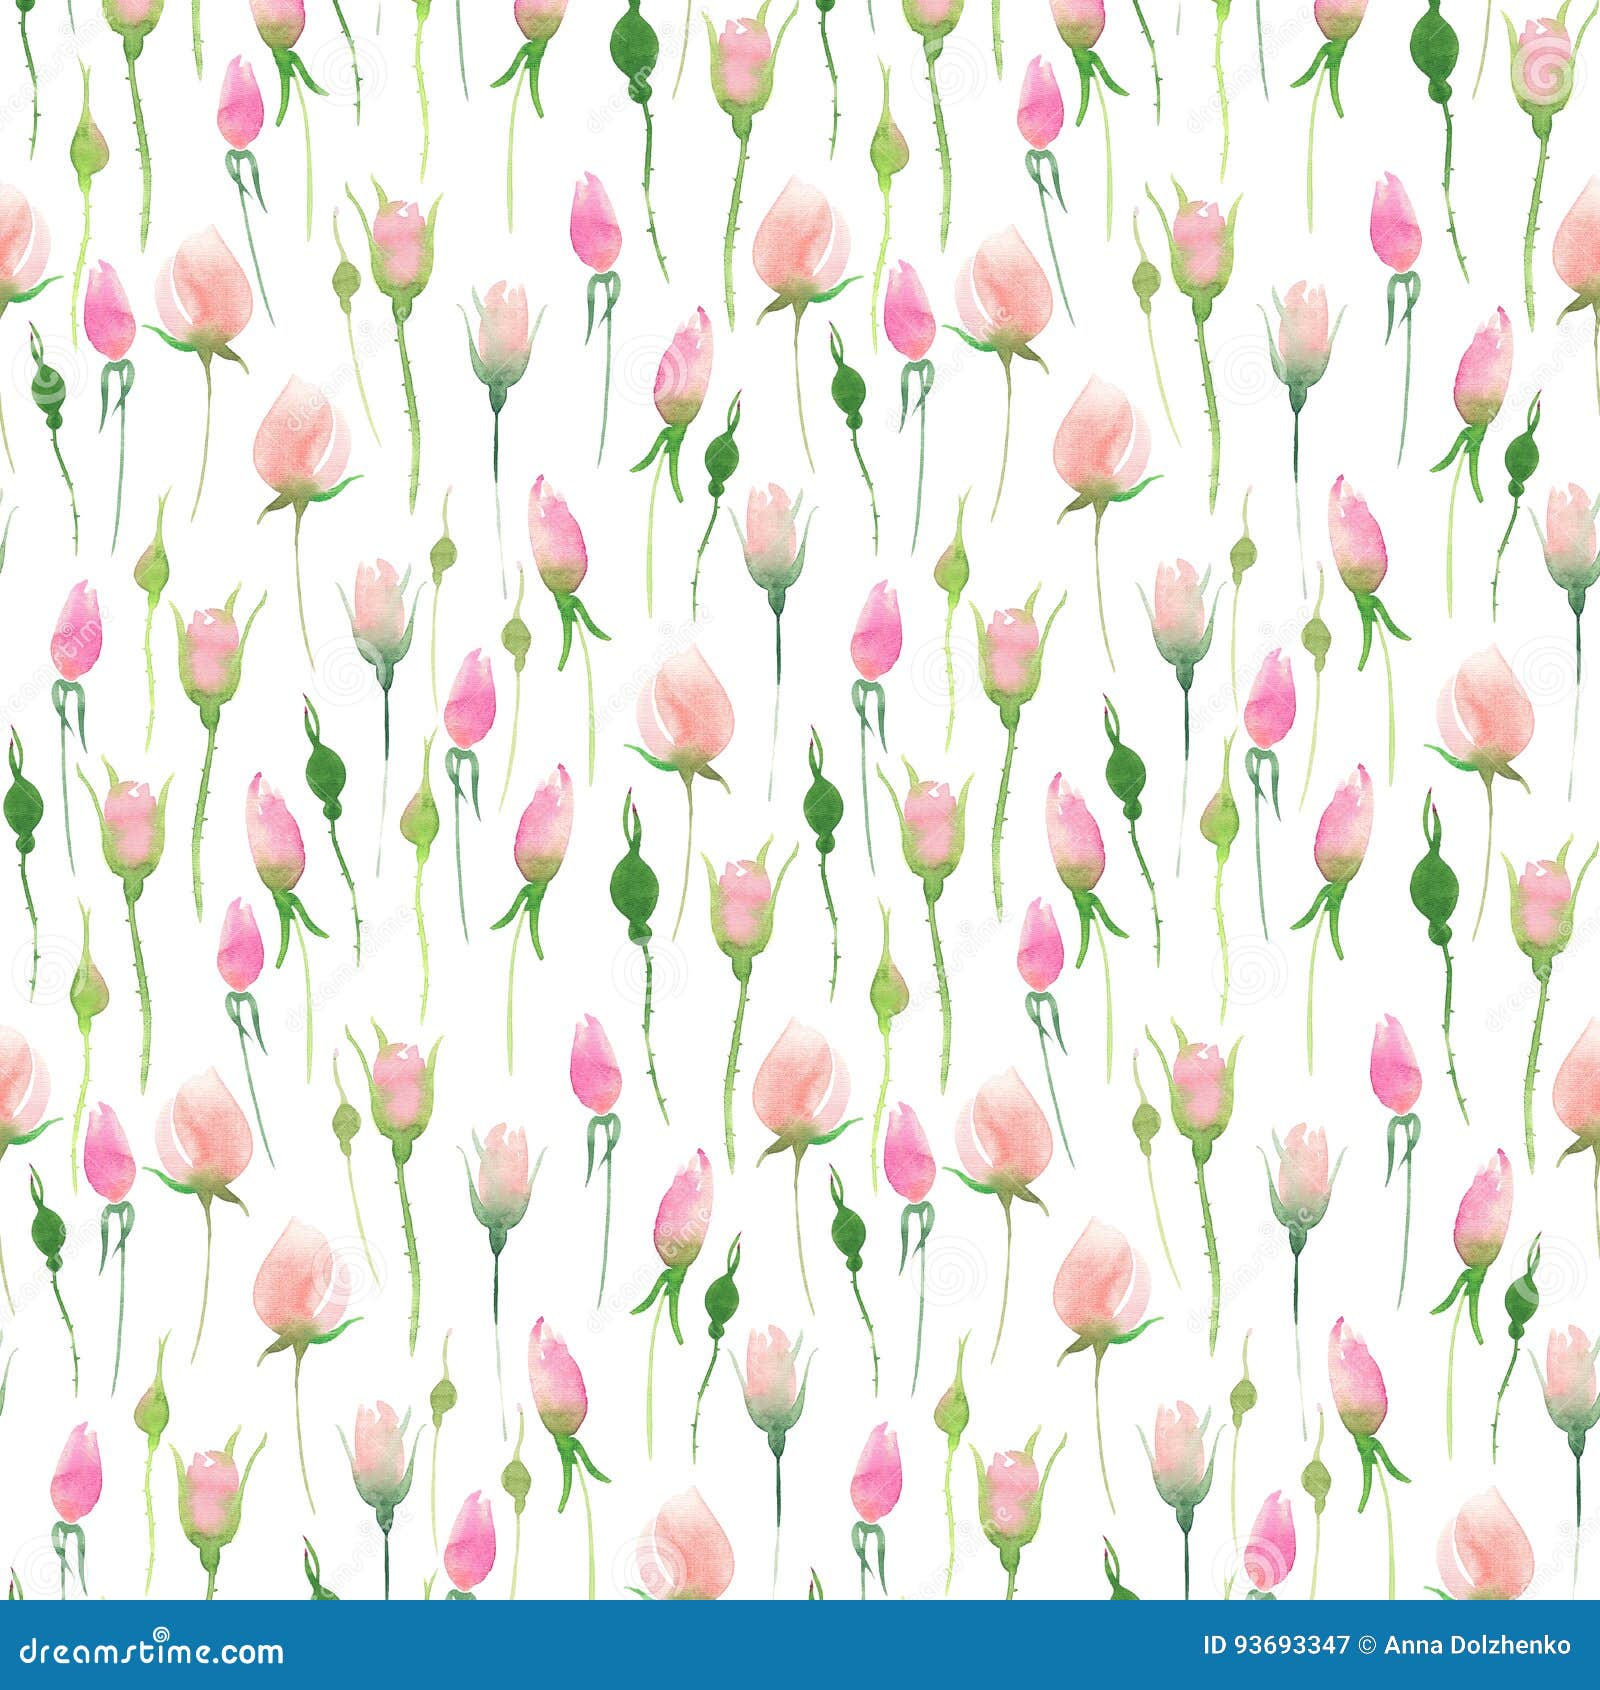 Delicate Tender Cute Elegant Lovely Floral Colorful Spring Summer Pink ...